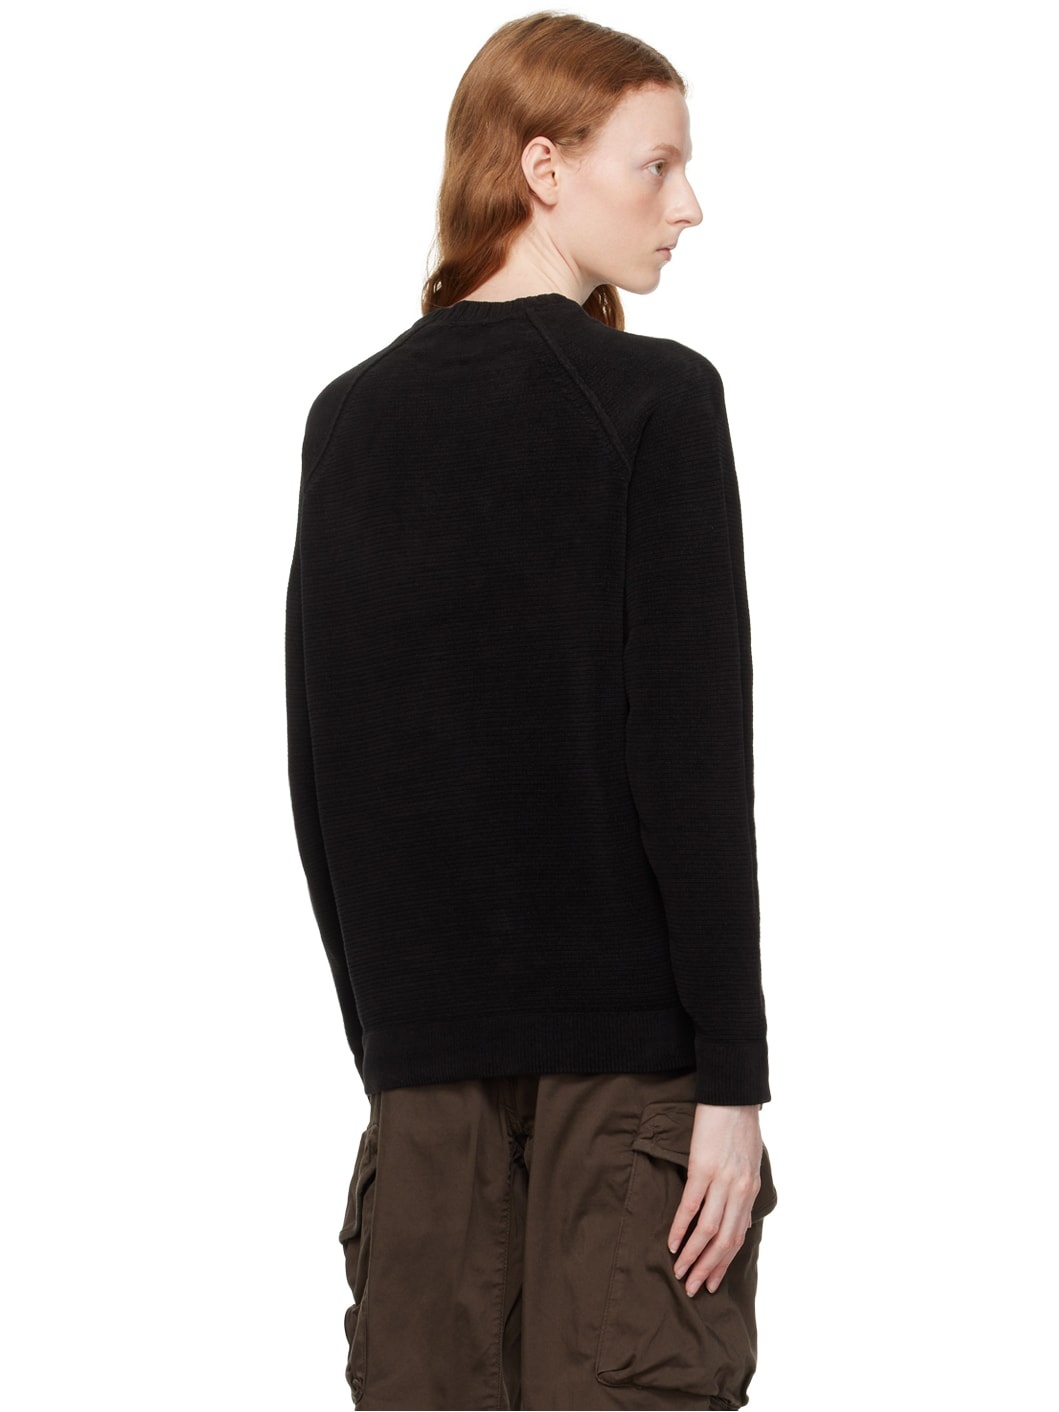 Black Crewneck Sweater - 3